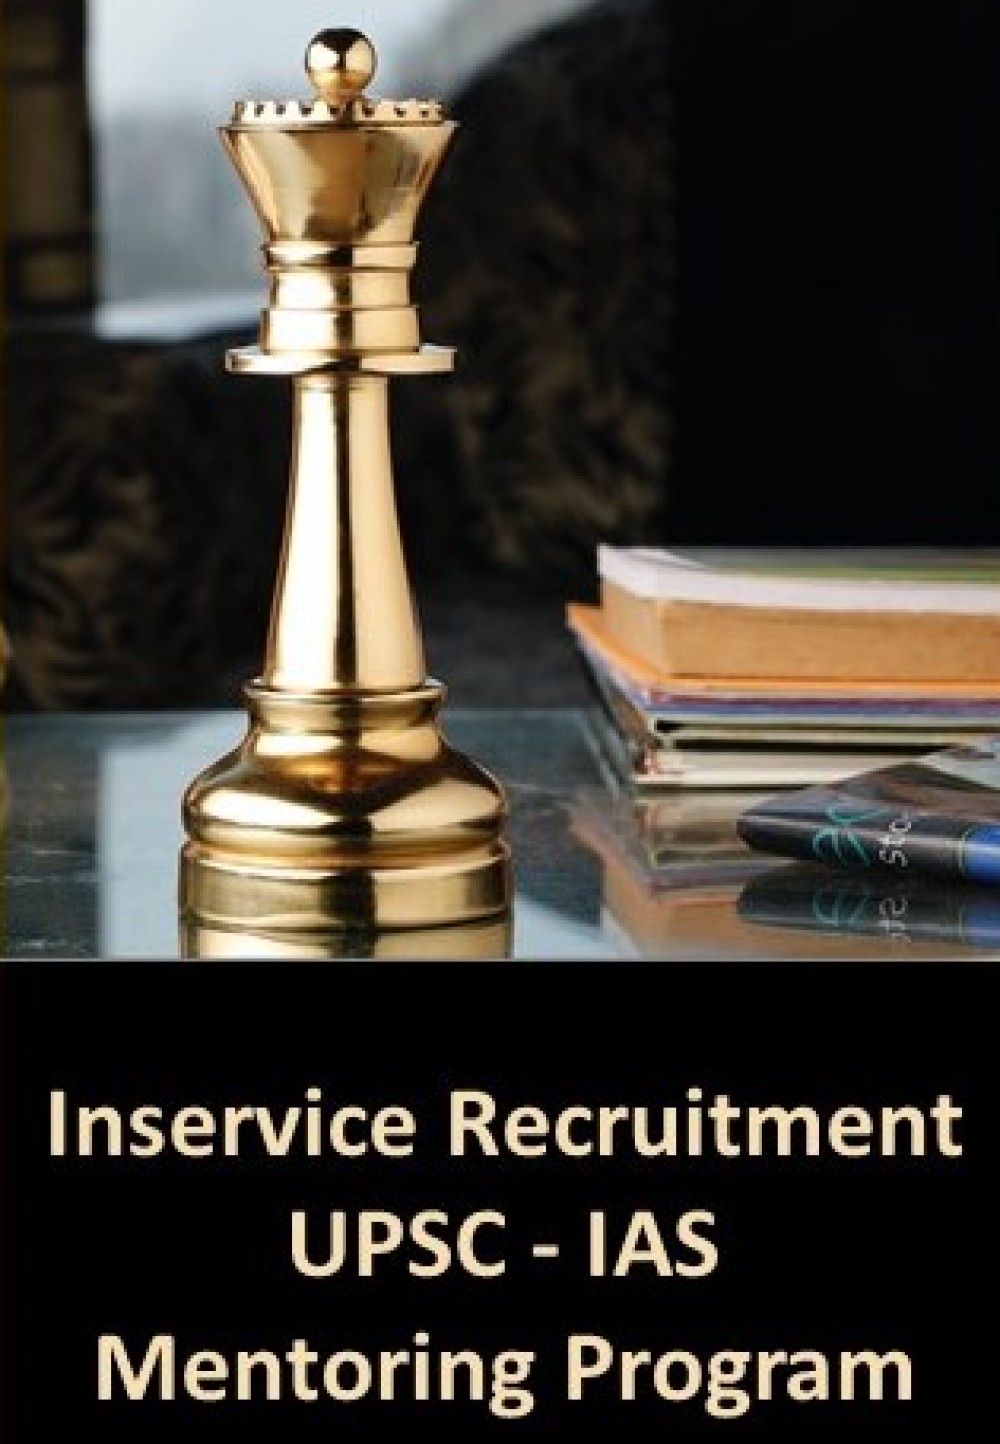 Inservice IAS Recruitment Mentoring Program